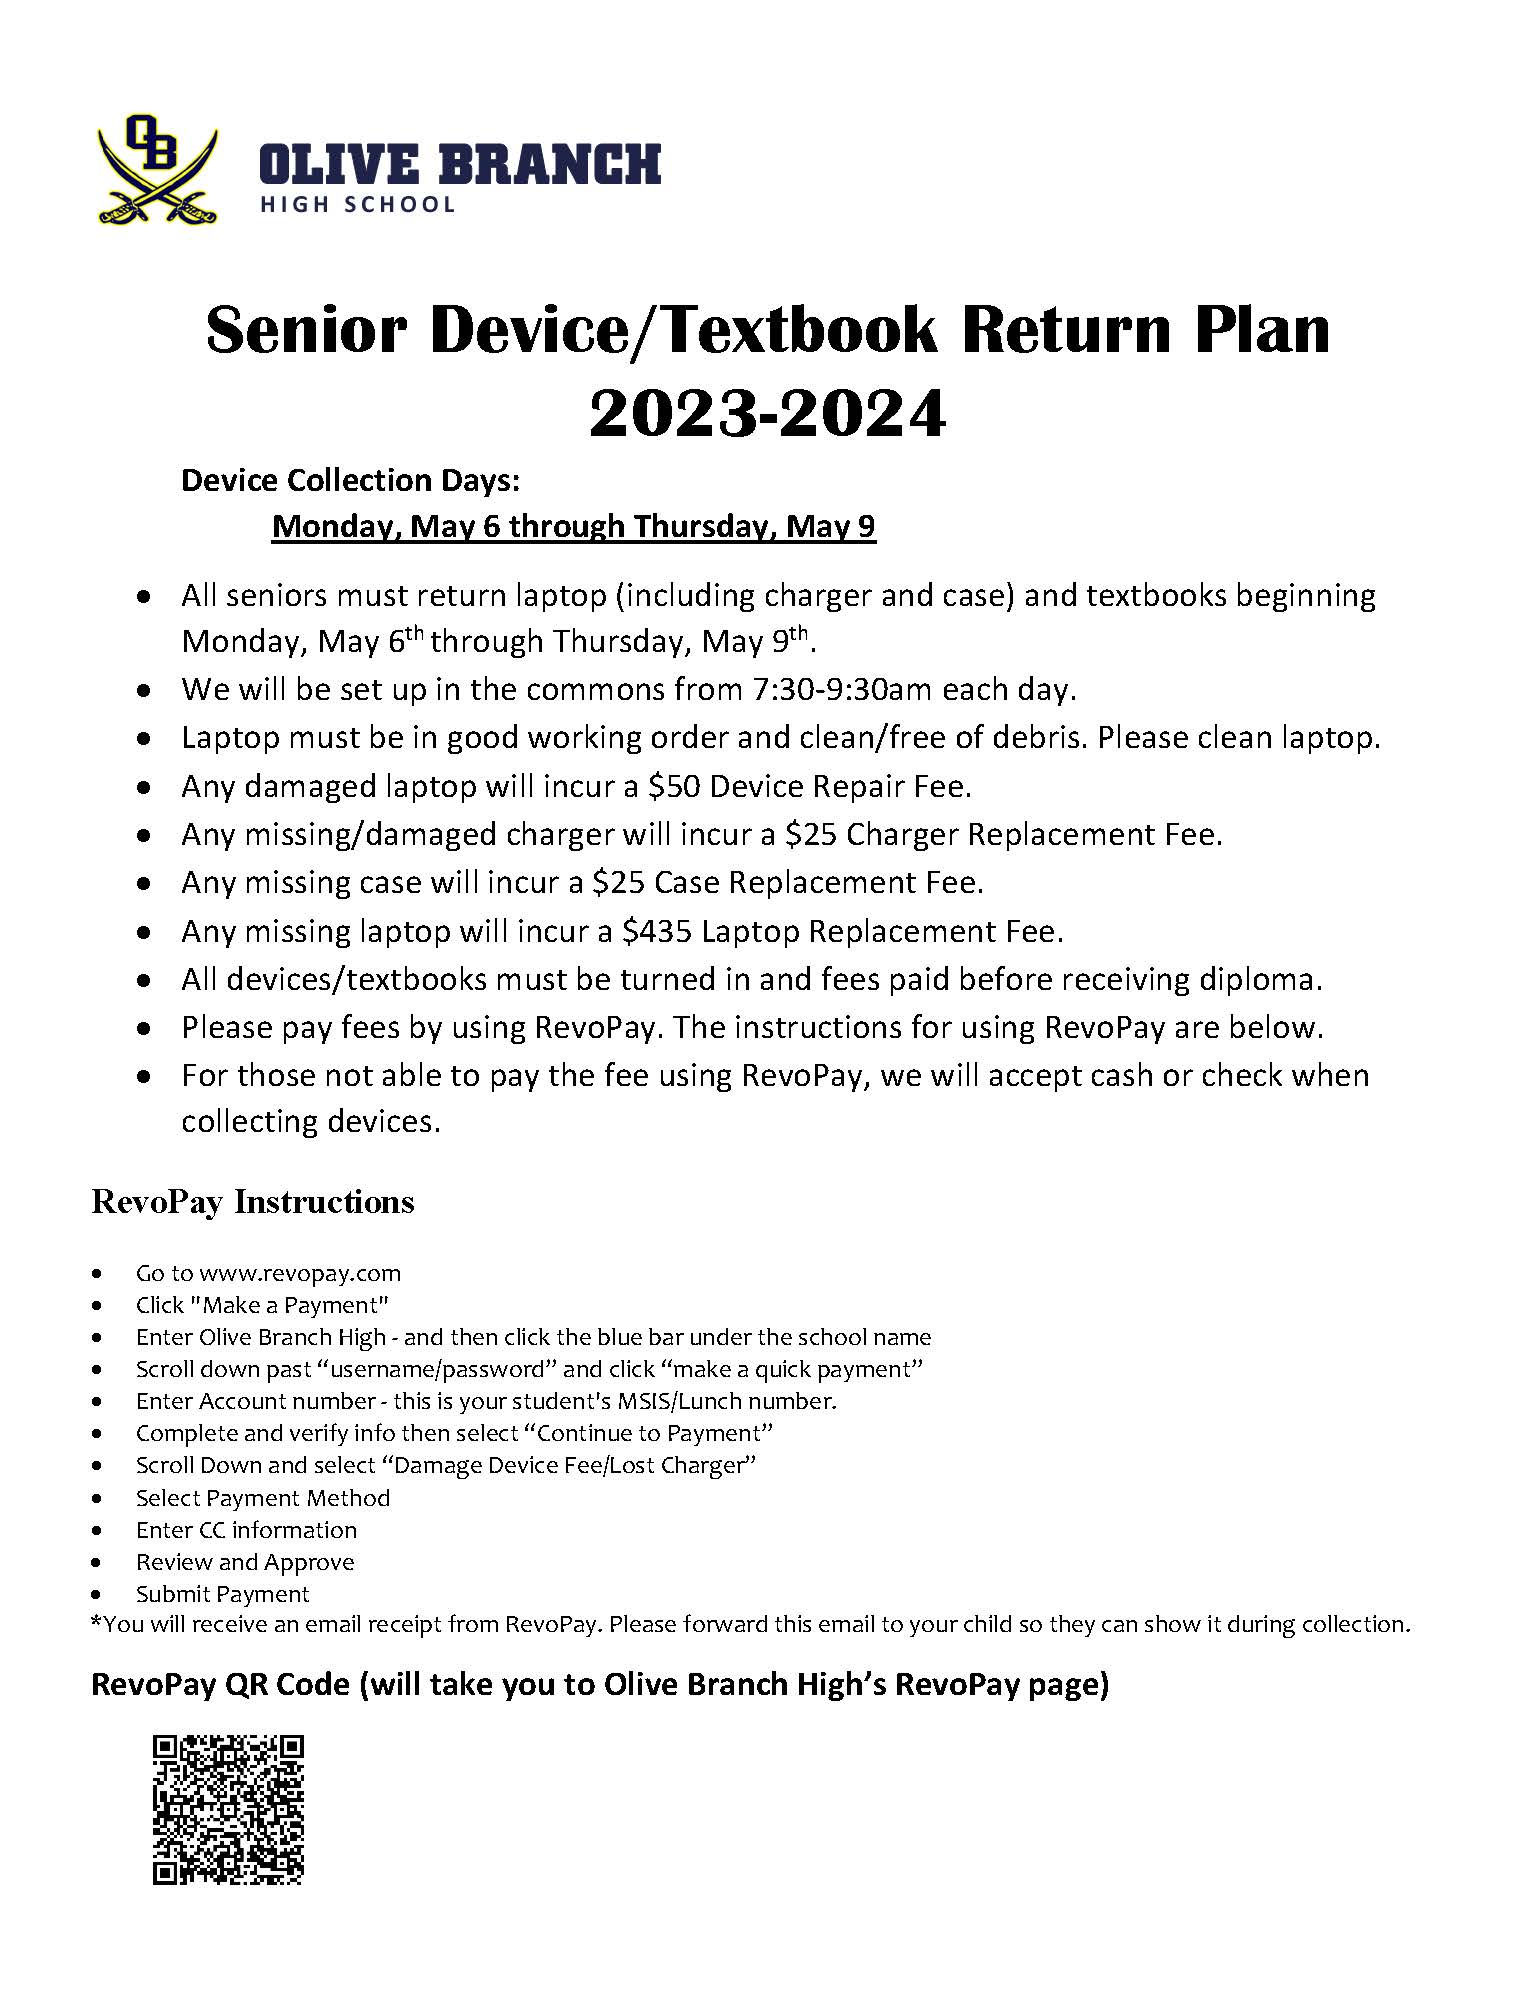 Senior Device Return Plan